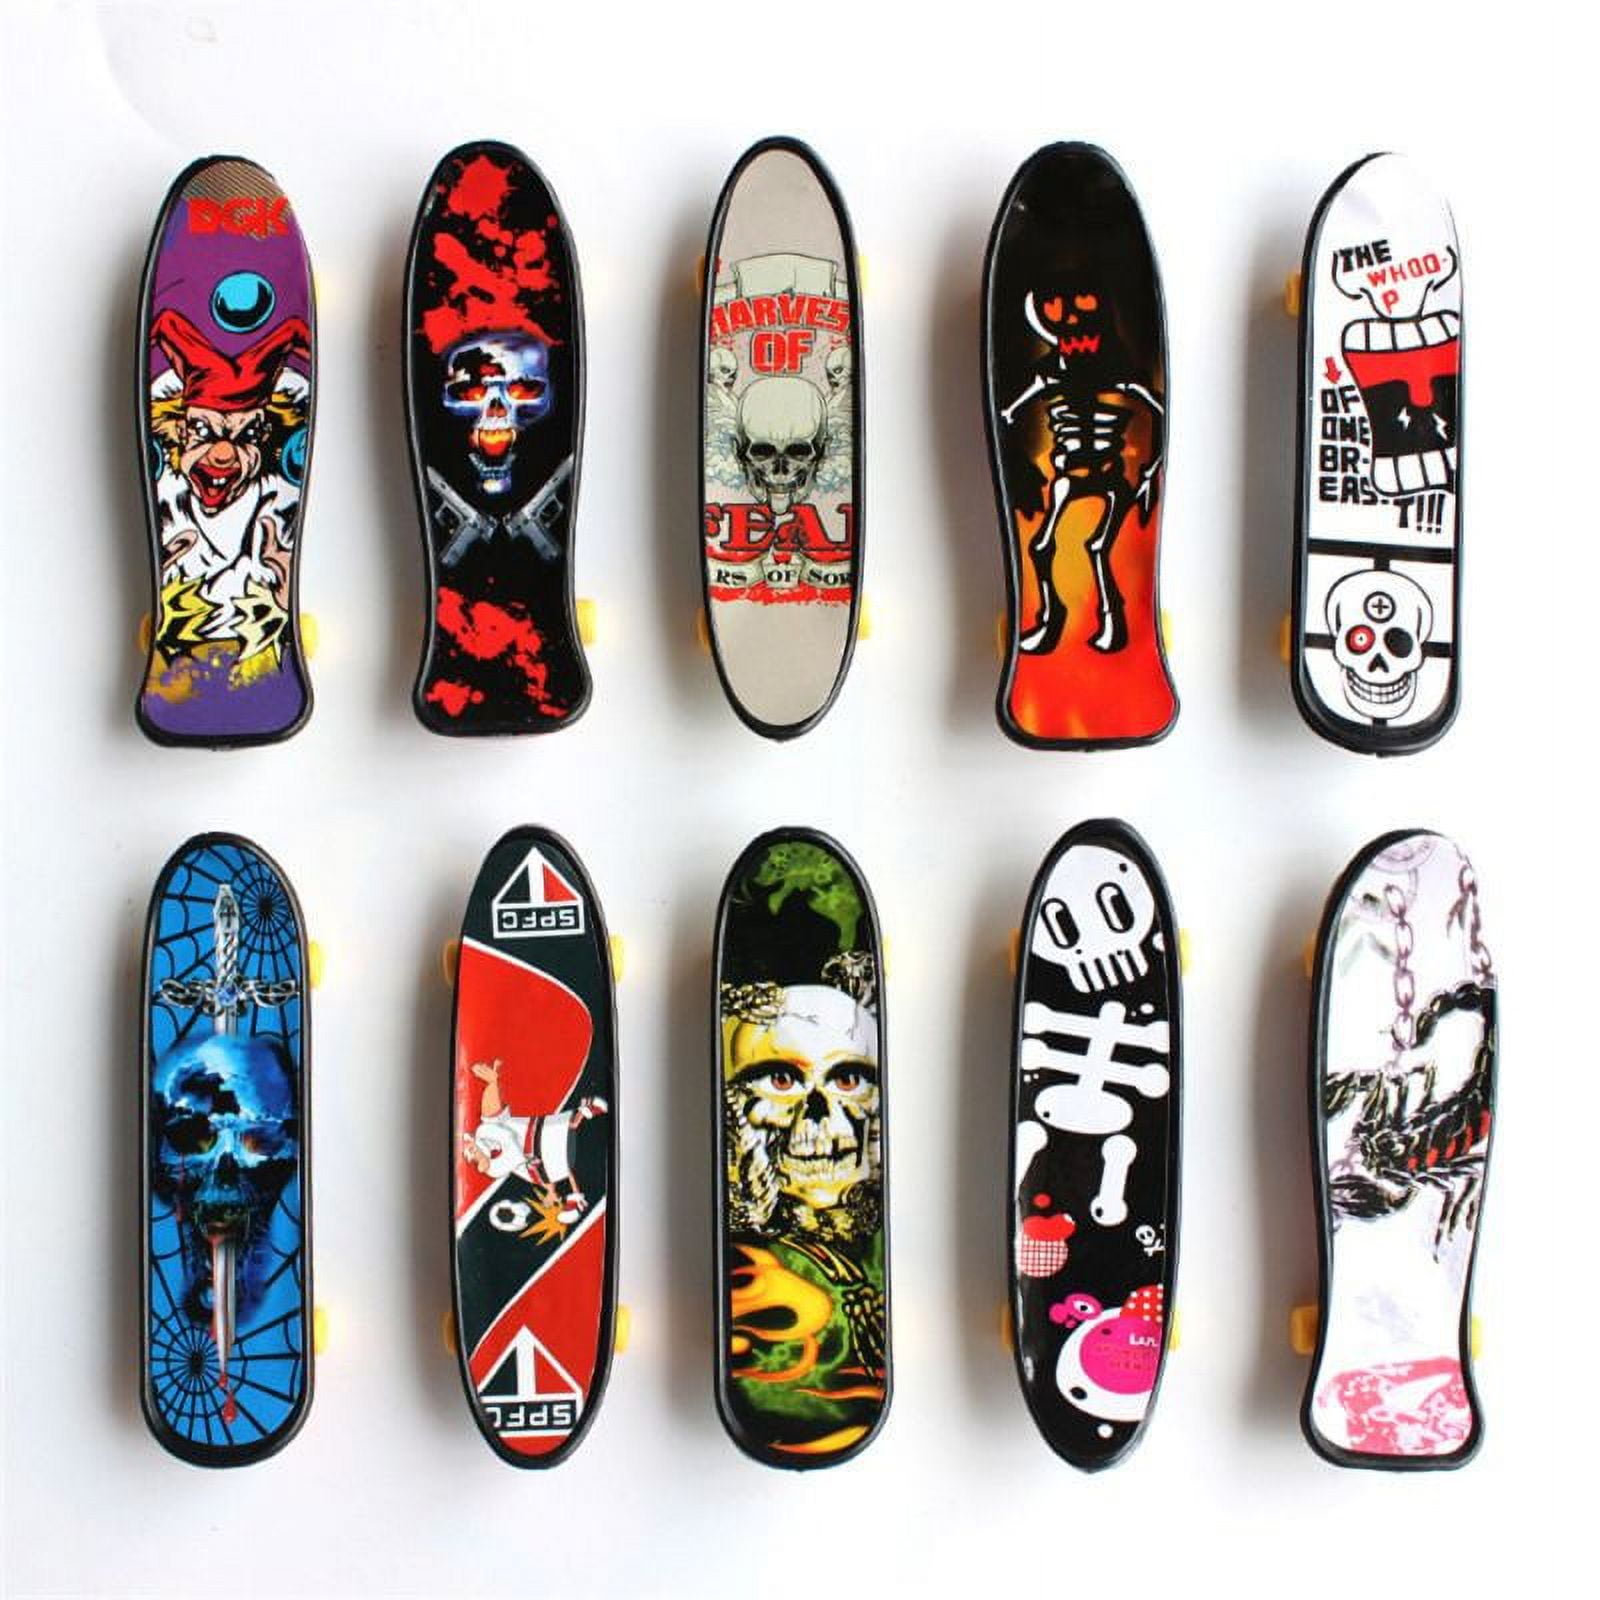 6 Pcs Finger Skateboards For Kids, Cool Finger Boards Toy Mini Skateboard  Games For Boys Girls Party Favors